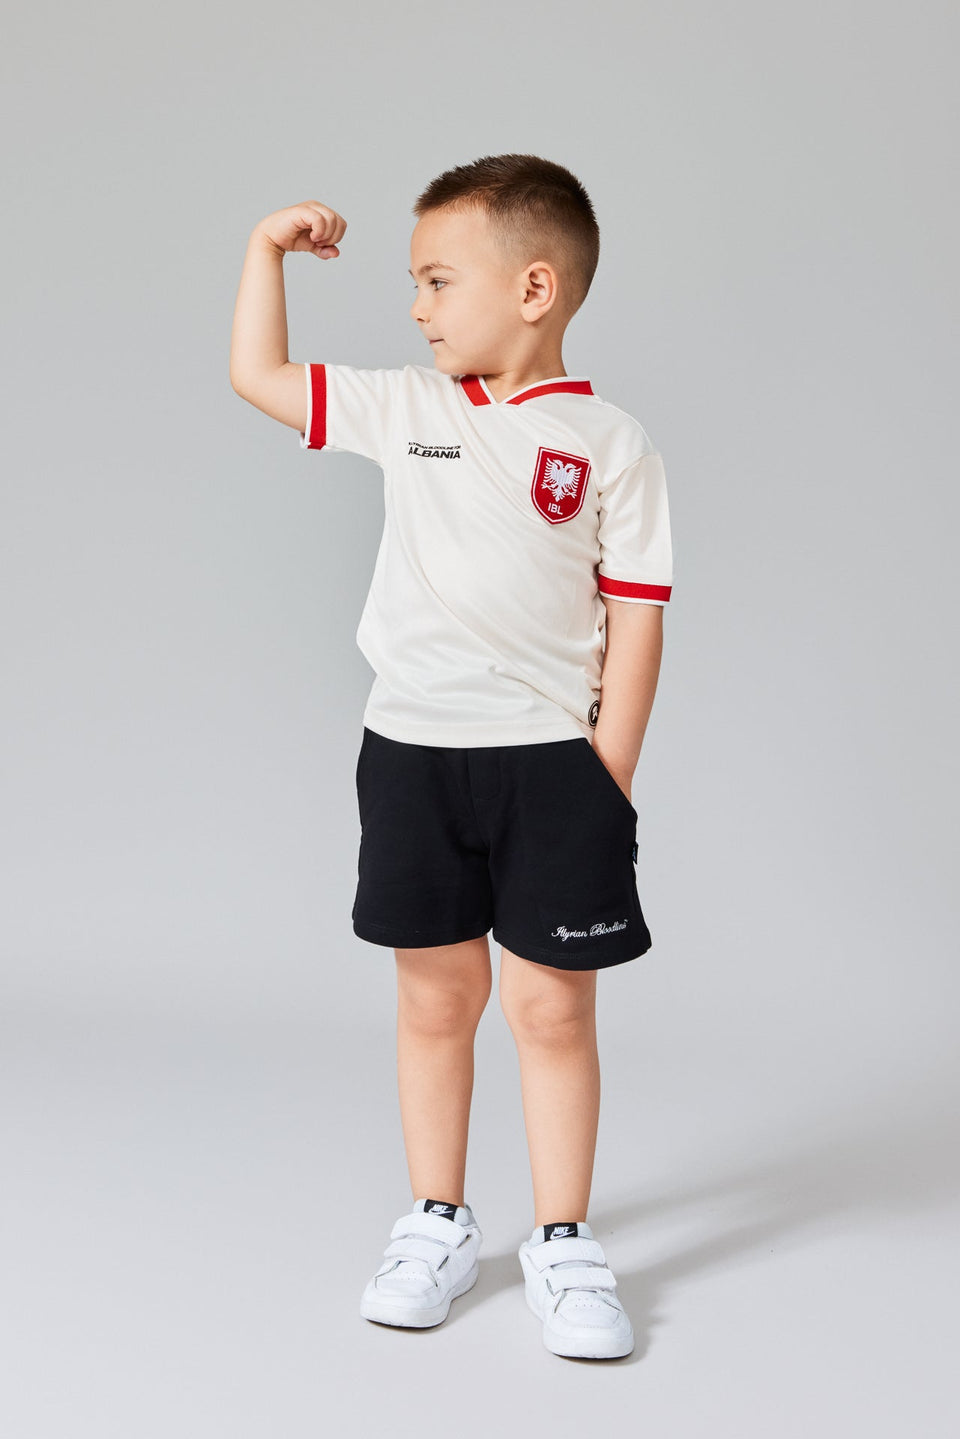 Kids' Albania 2024 Jersey - White